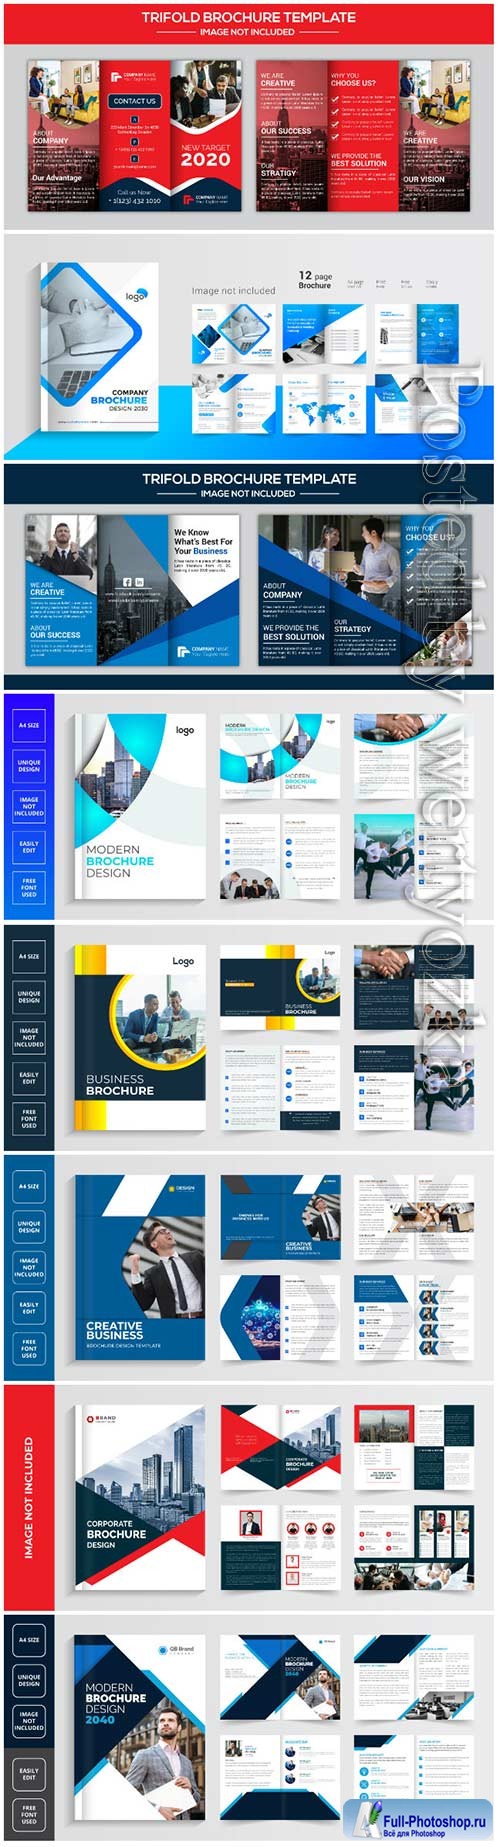 Vector business brochure design template